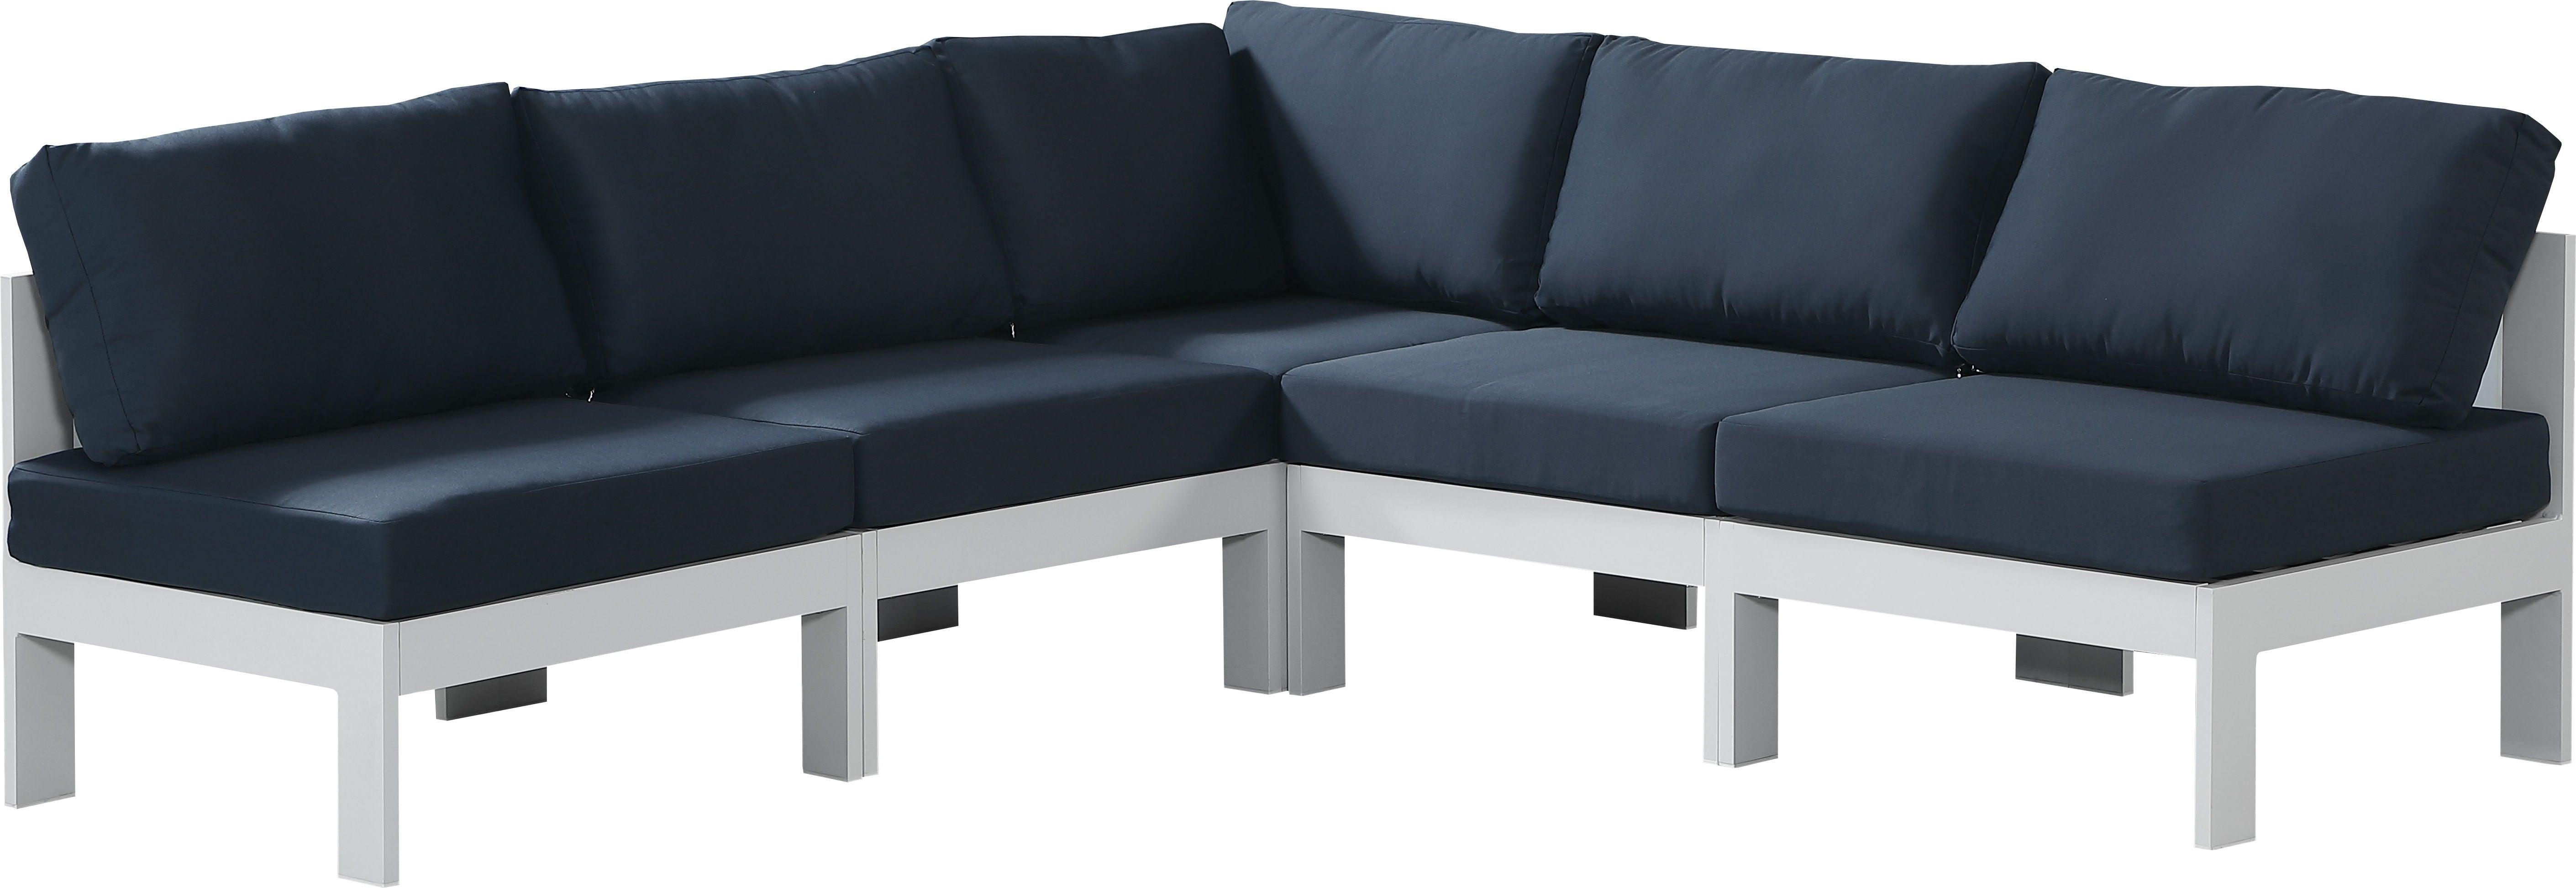 Meridian Furniture - Nizuc - Outdoor Patio Modular Sectional 5 Piece - Navy - Fabric - Modern & Contemporary - 5th Avenue Furniture